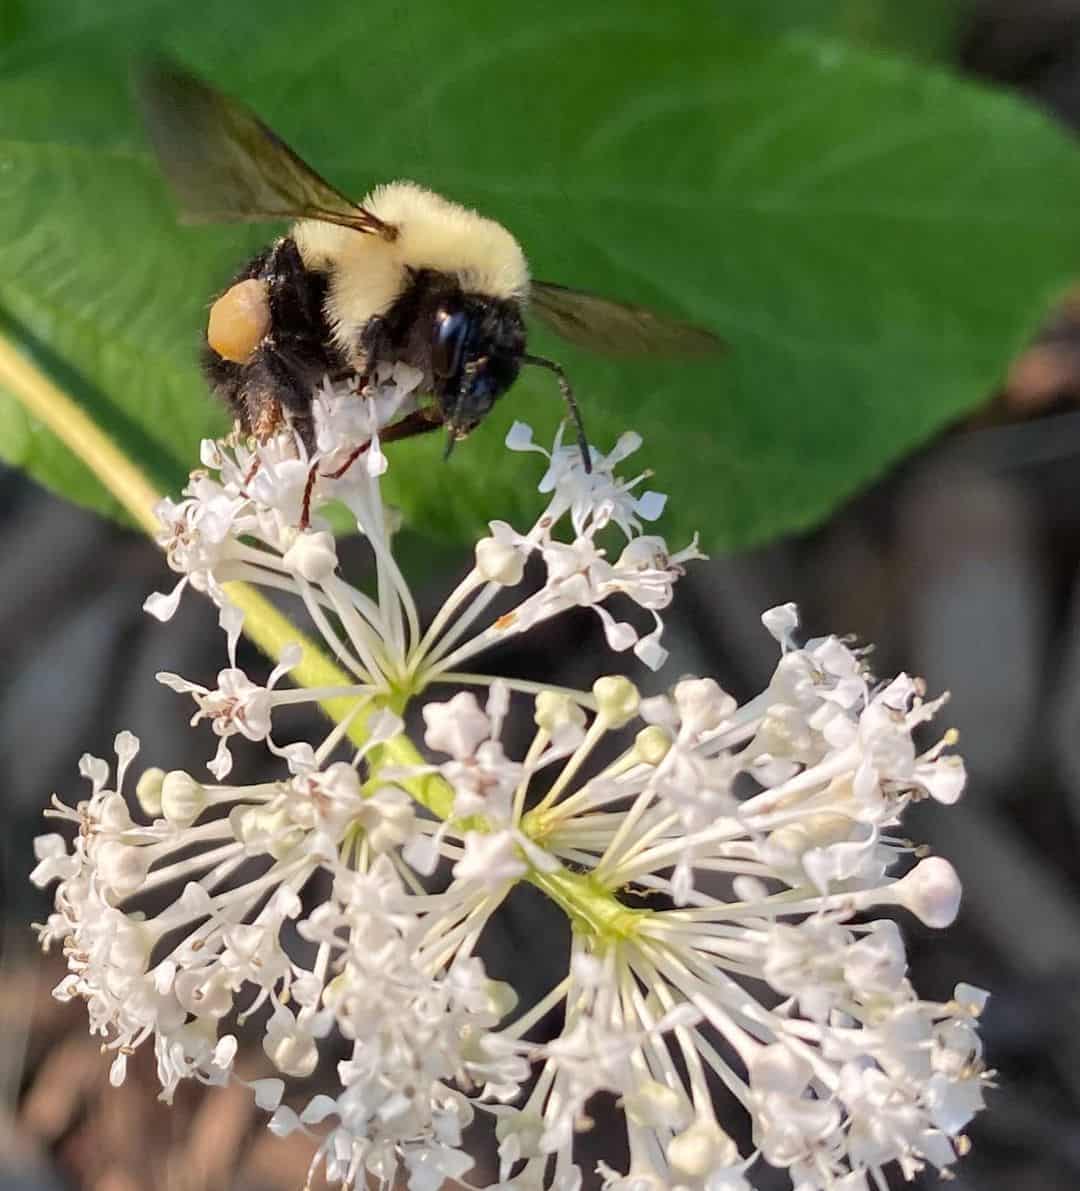 Bees-and-Wasps1